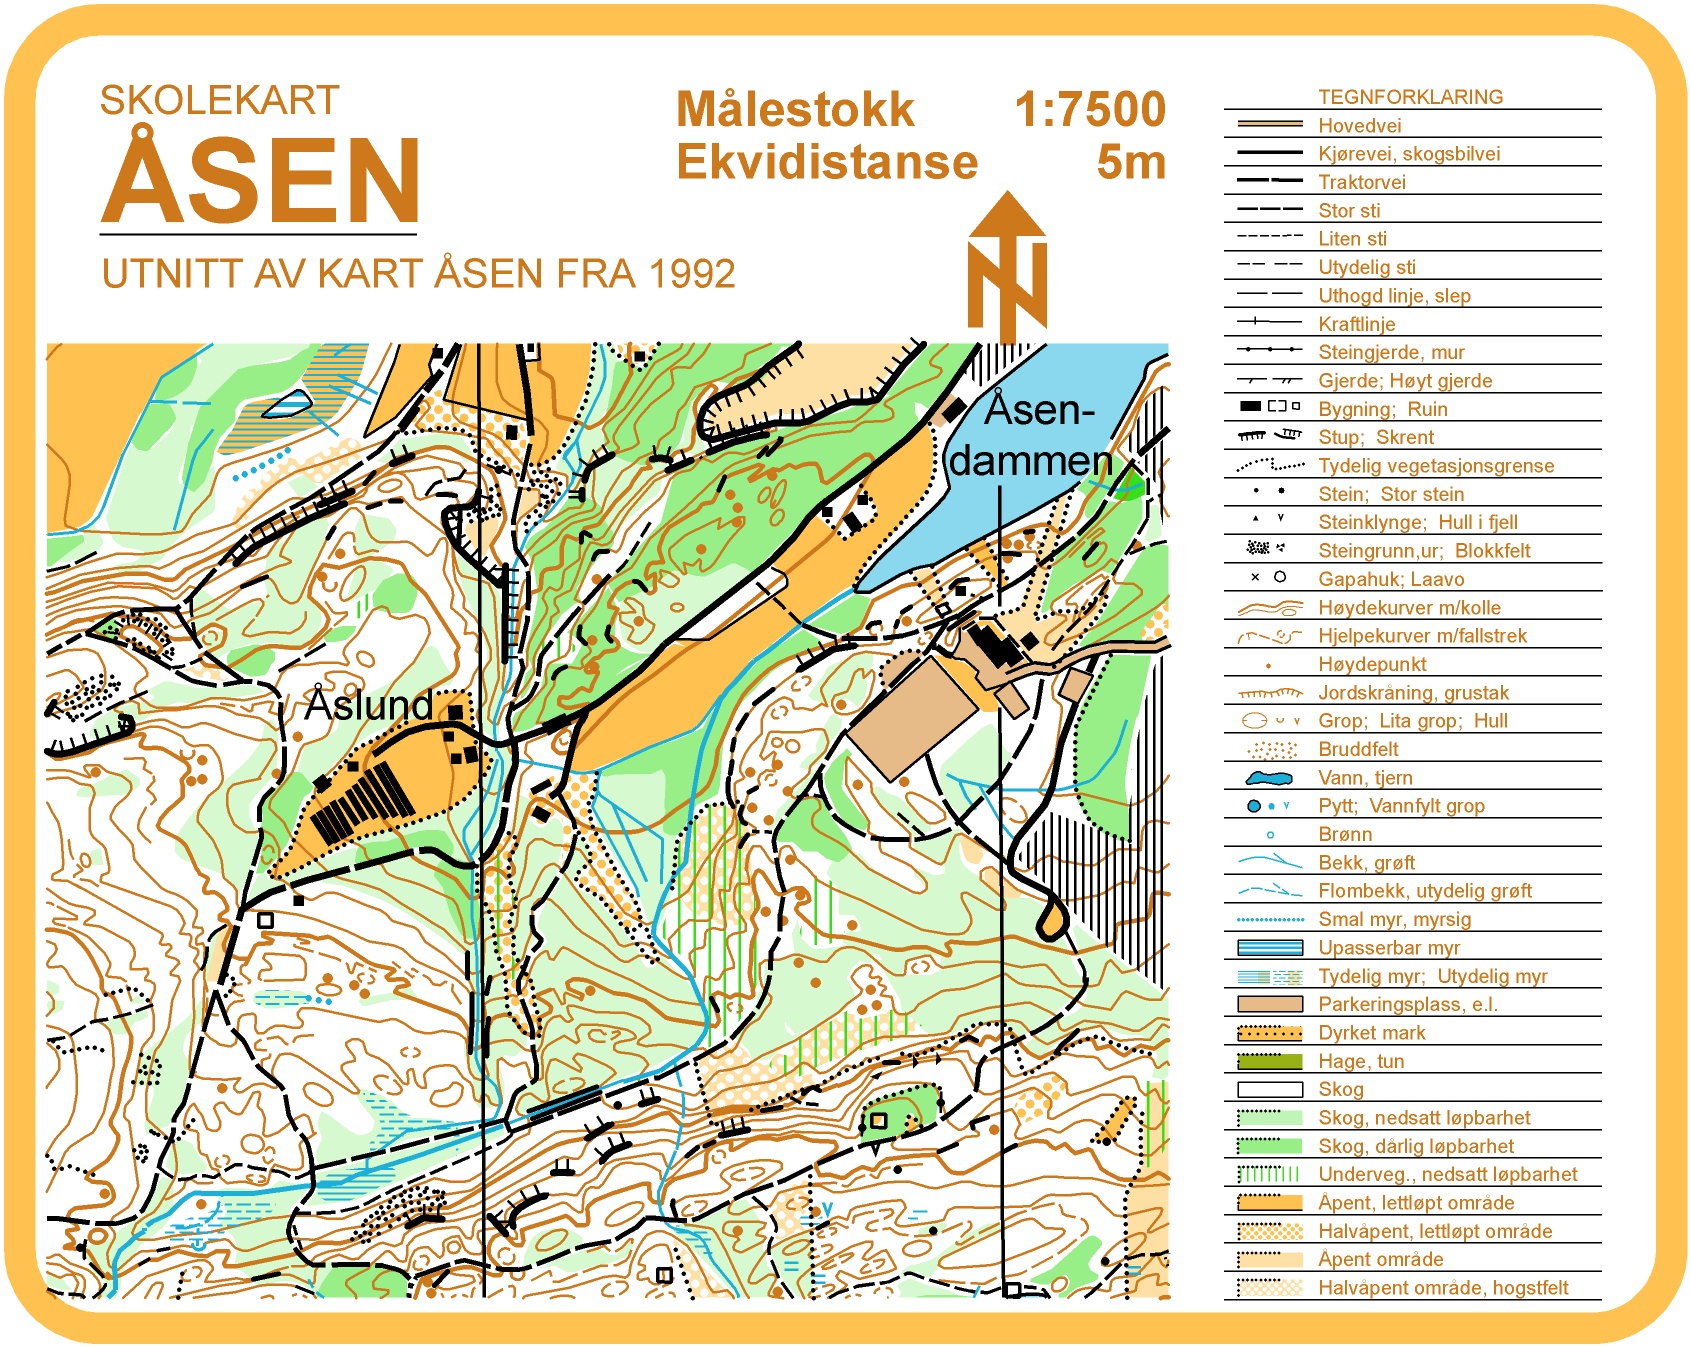 Skolekart Åsen (01-05-1992)